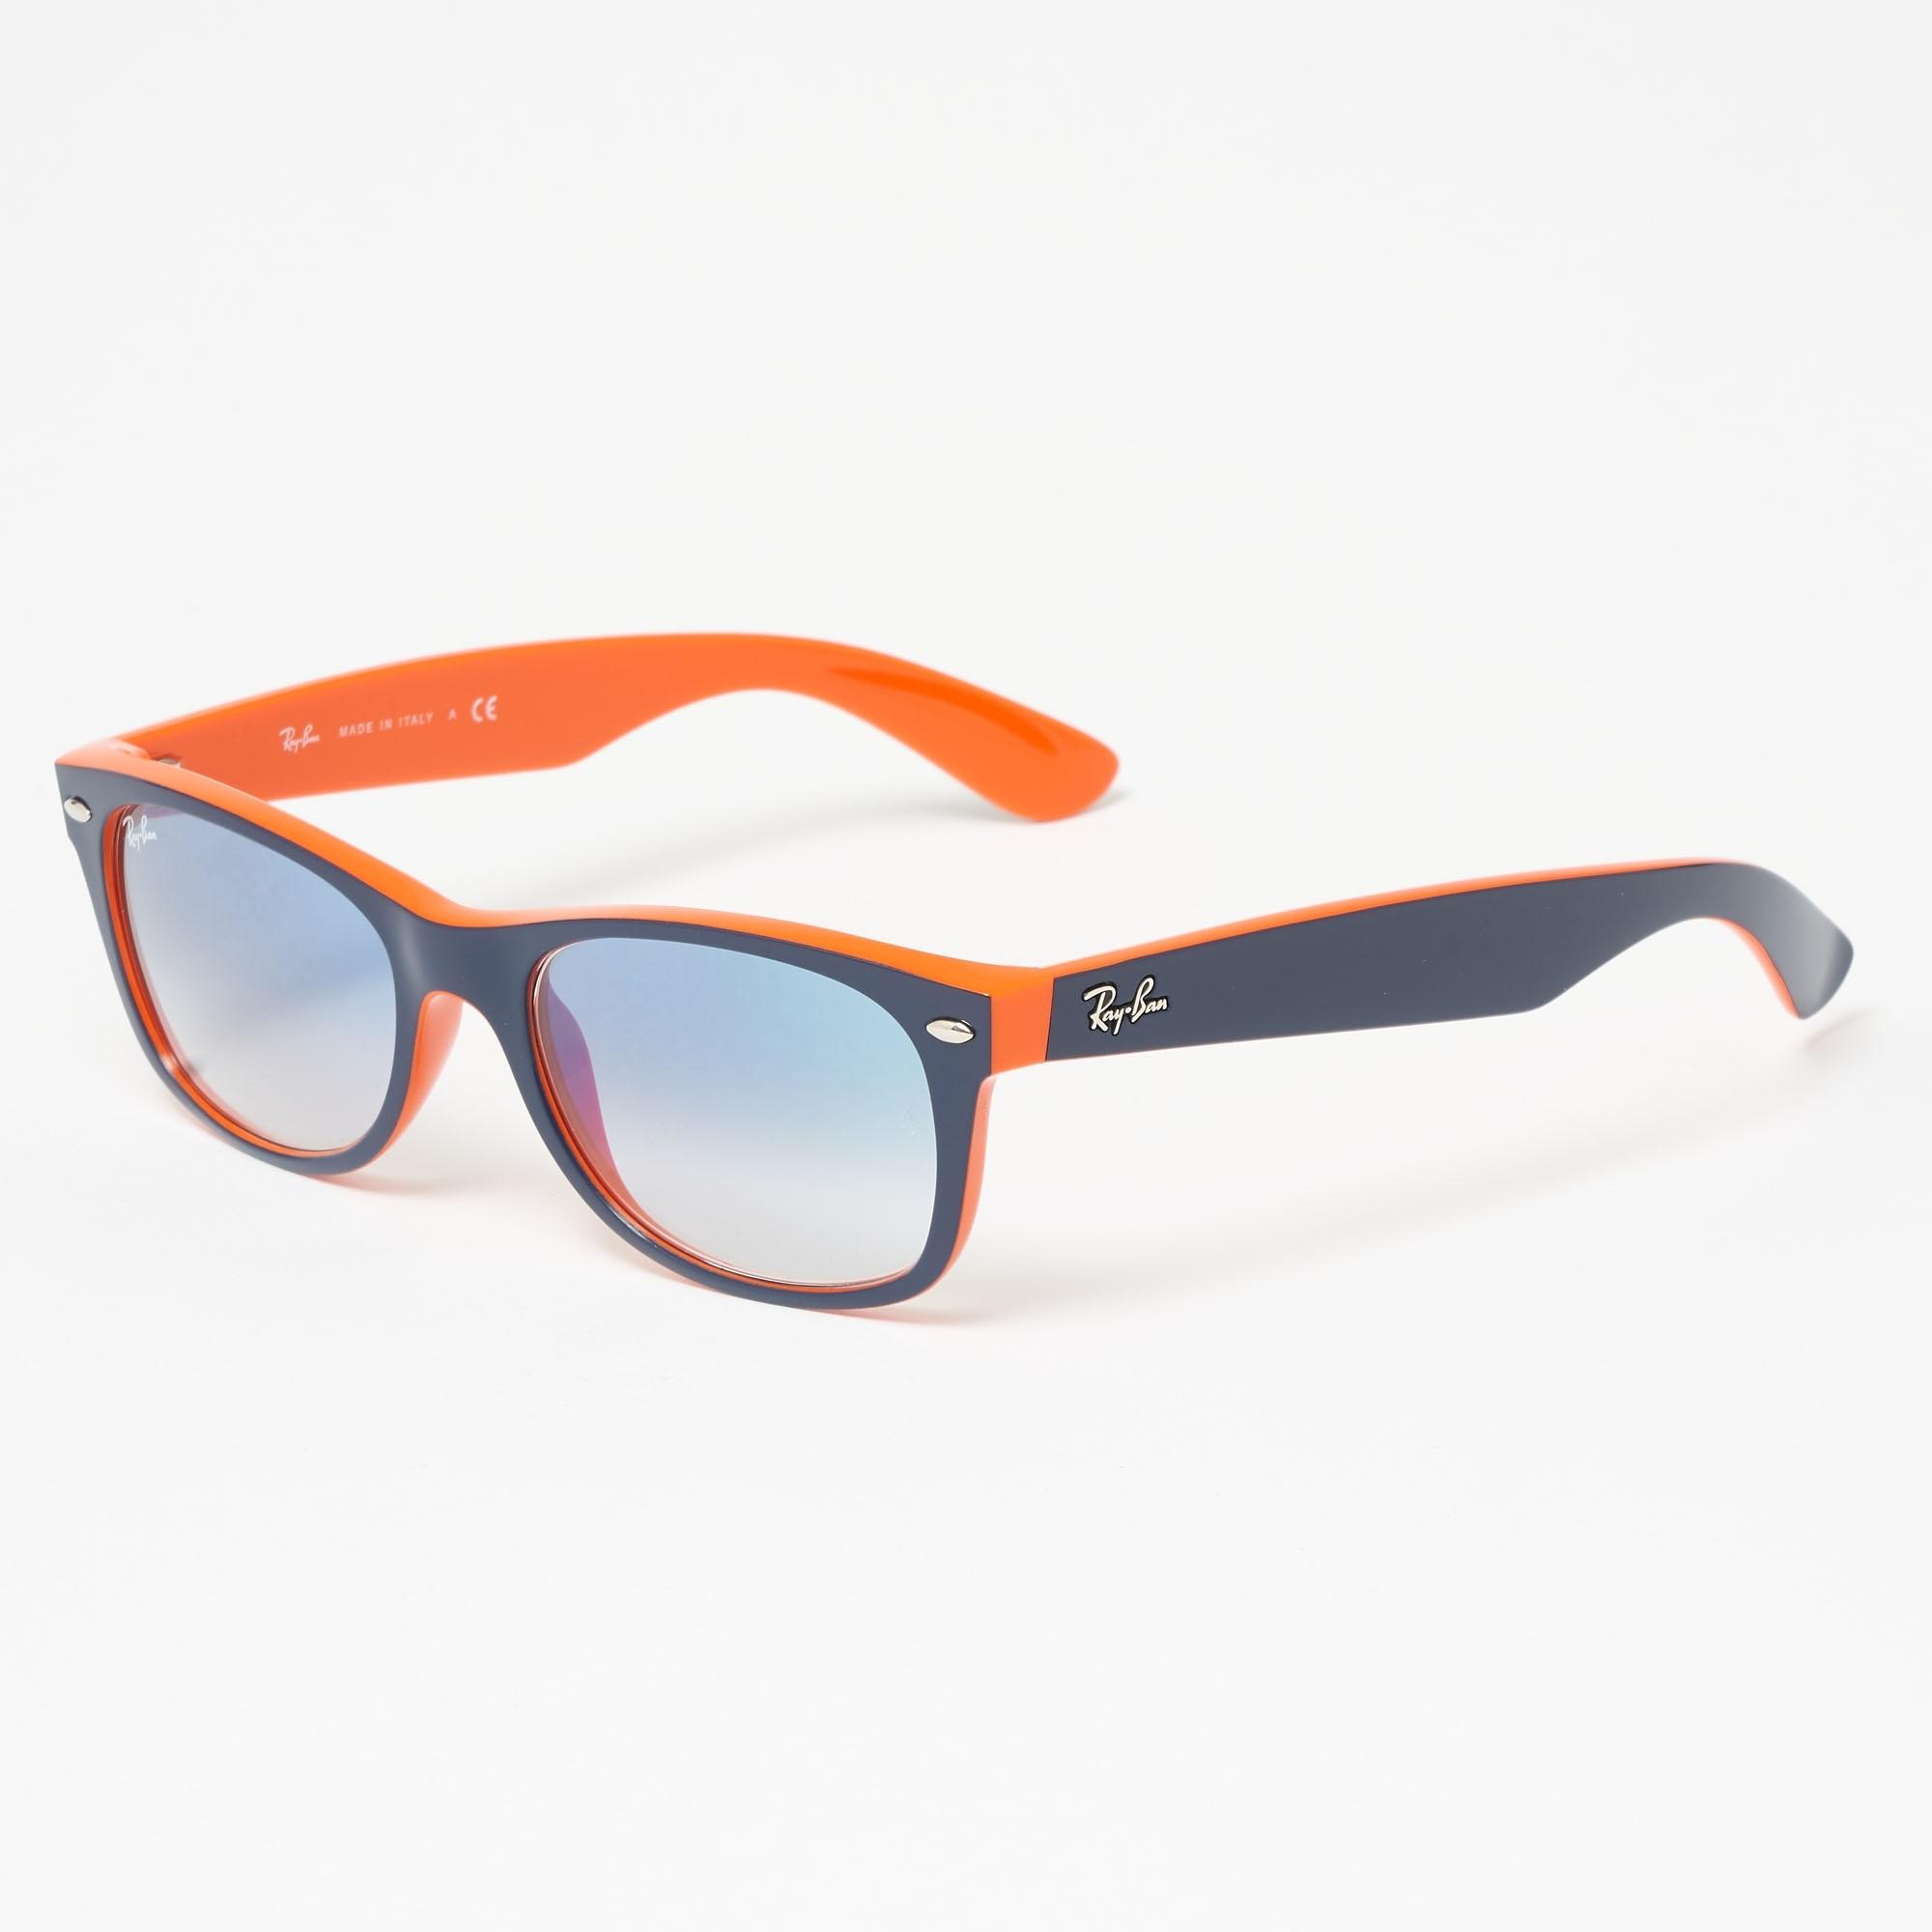 ray ban orange and blue sunglasses